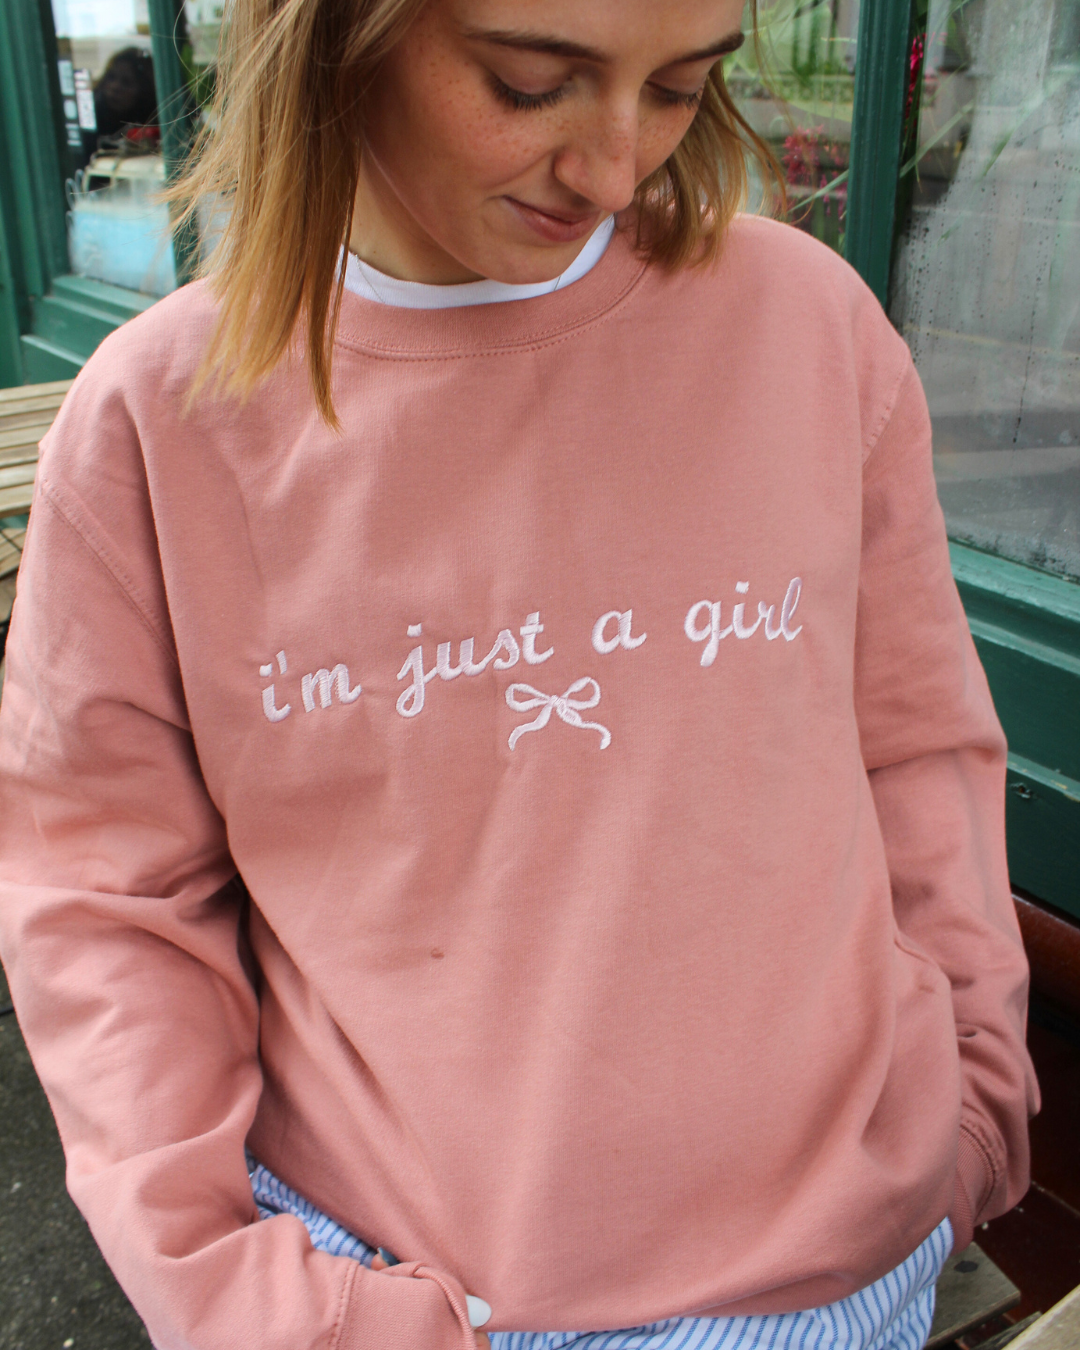 I'm Just a Girl Sweatshirt